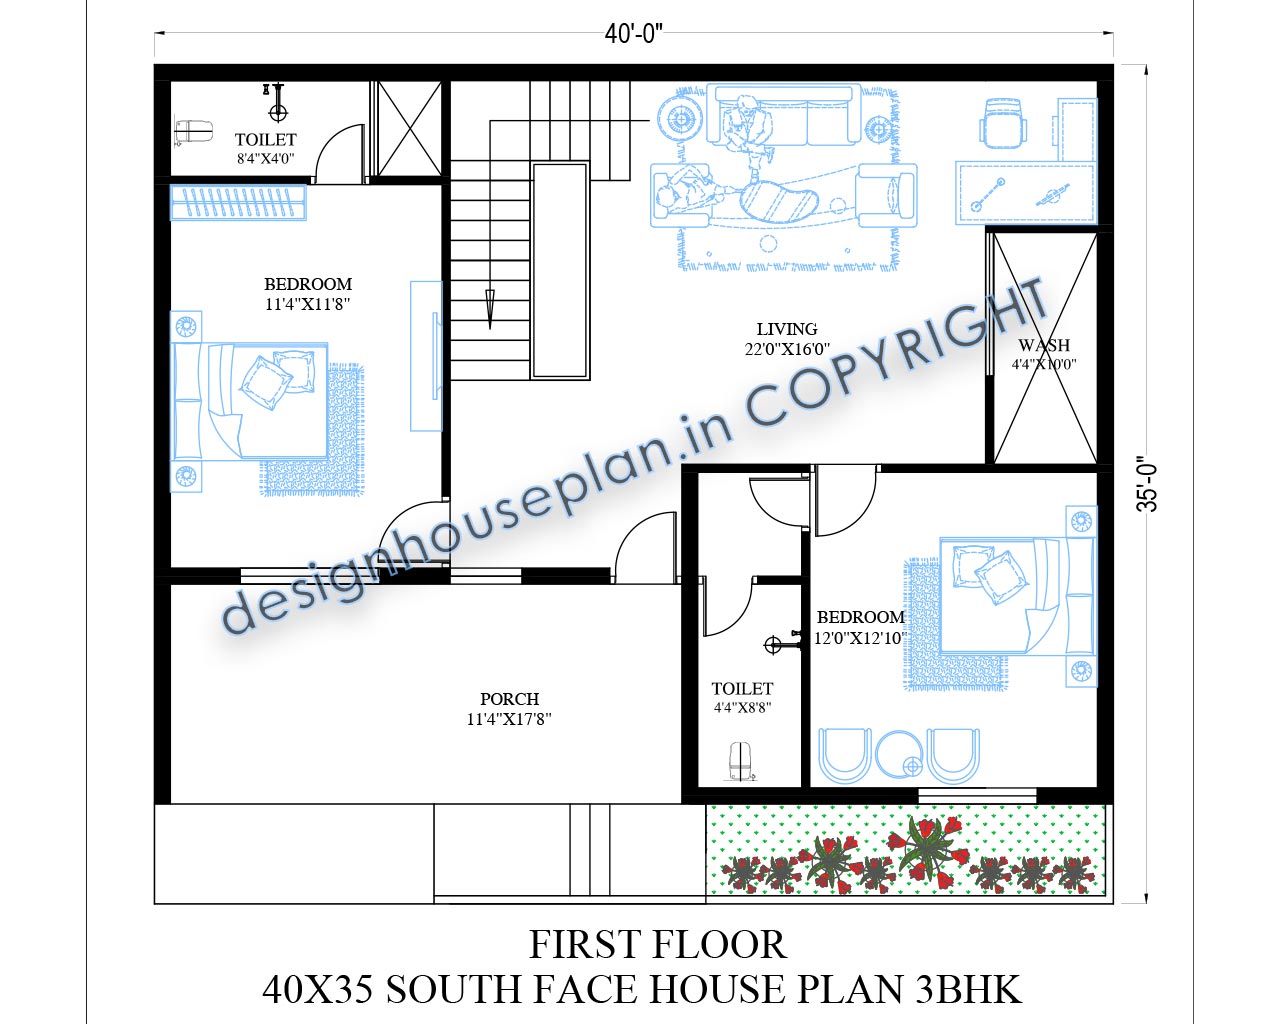 40x35 duplex south face house plan 3bhk